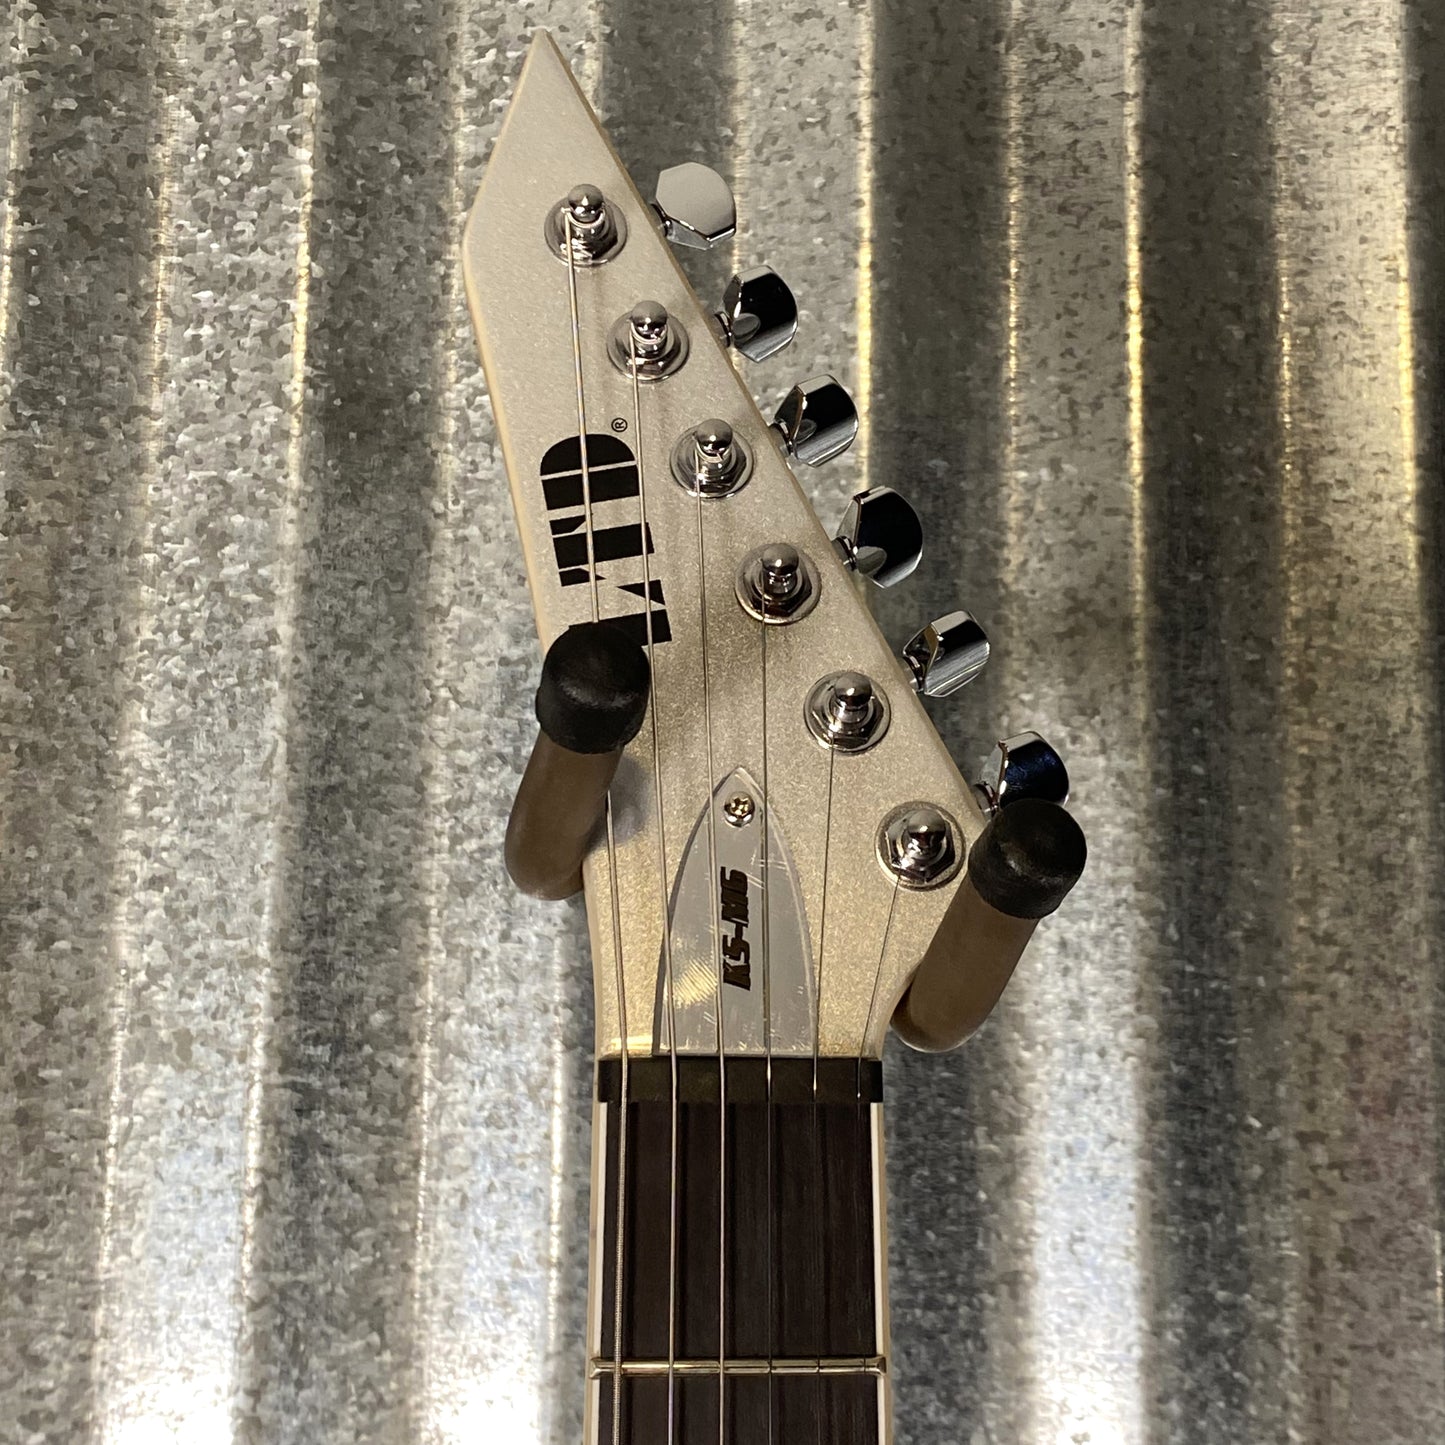 ESP LTD Ken Susi M-6 Evertune Metallic Silver Guitar & Case LKSM6ETMS #0259 Used